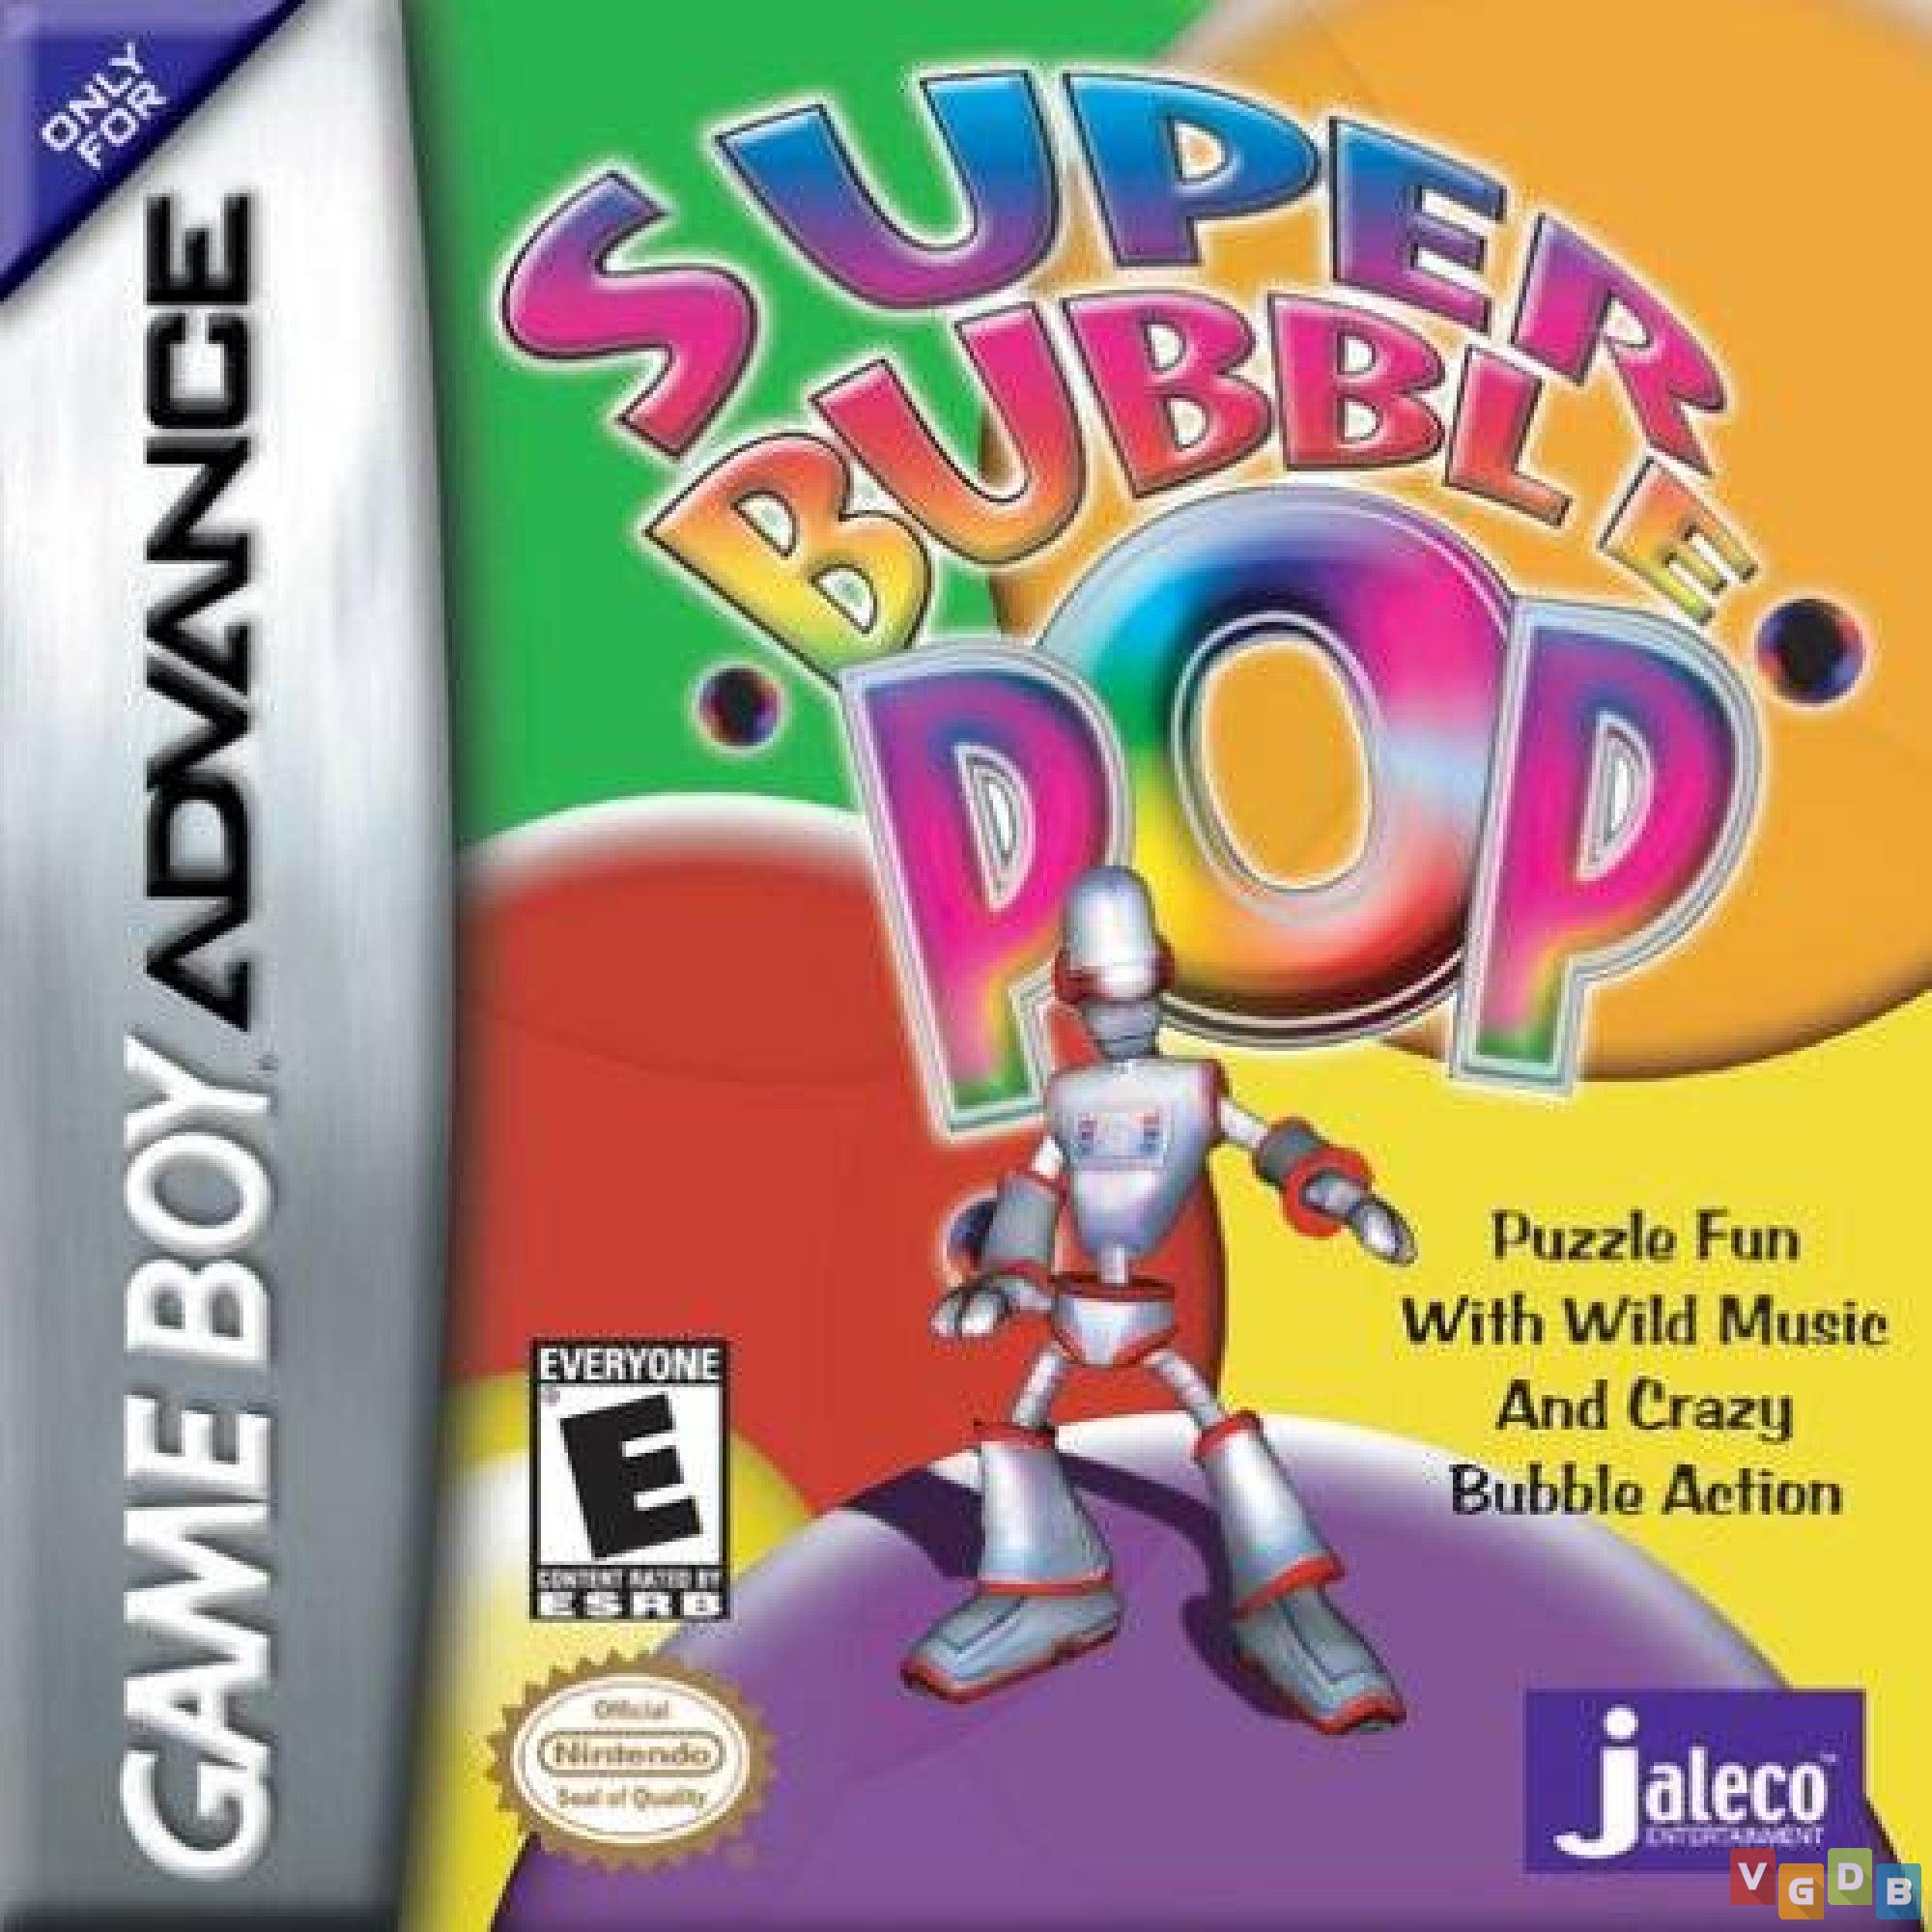 Super Bubble Pop - VGDB - Vídeo Game Data Base